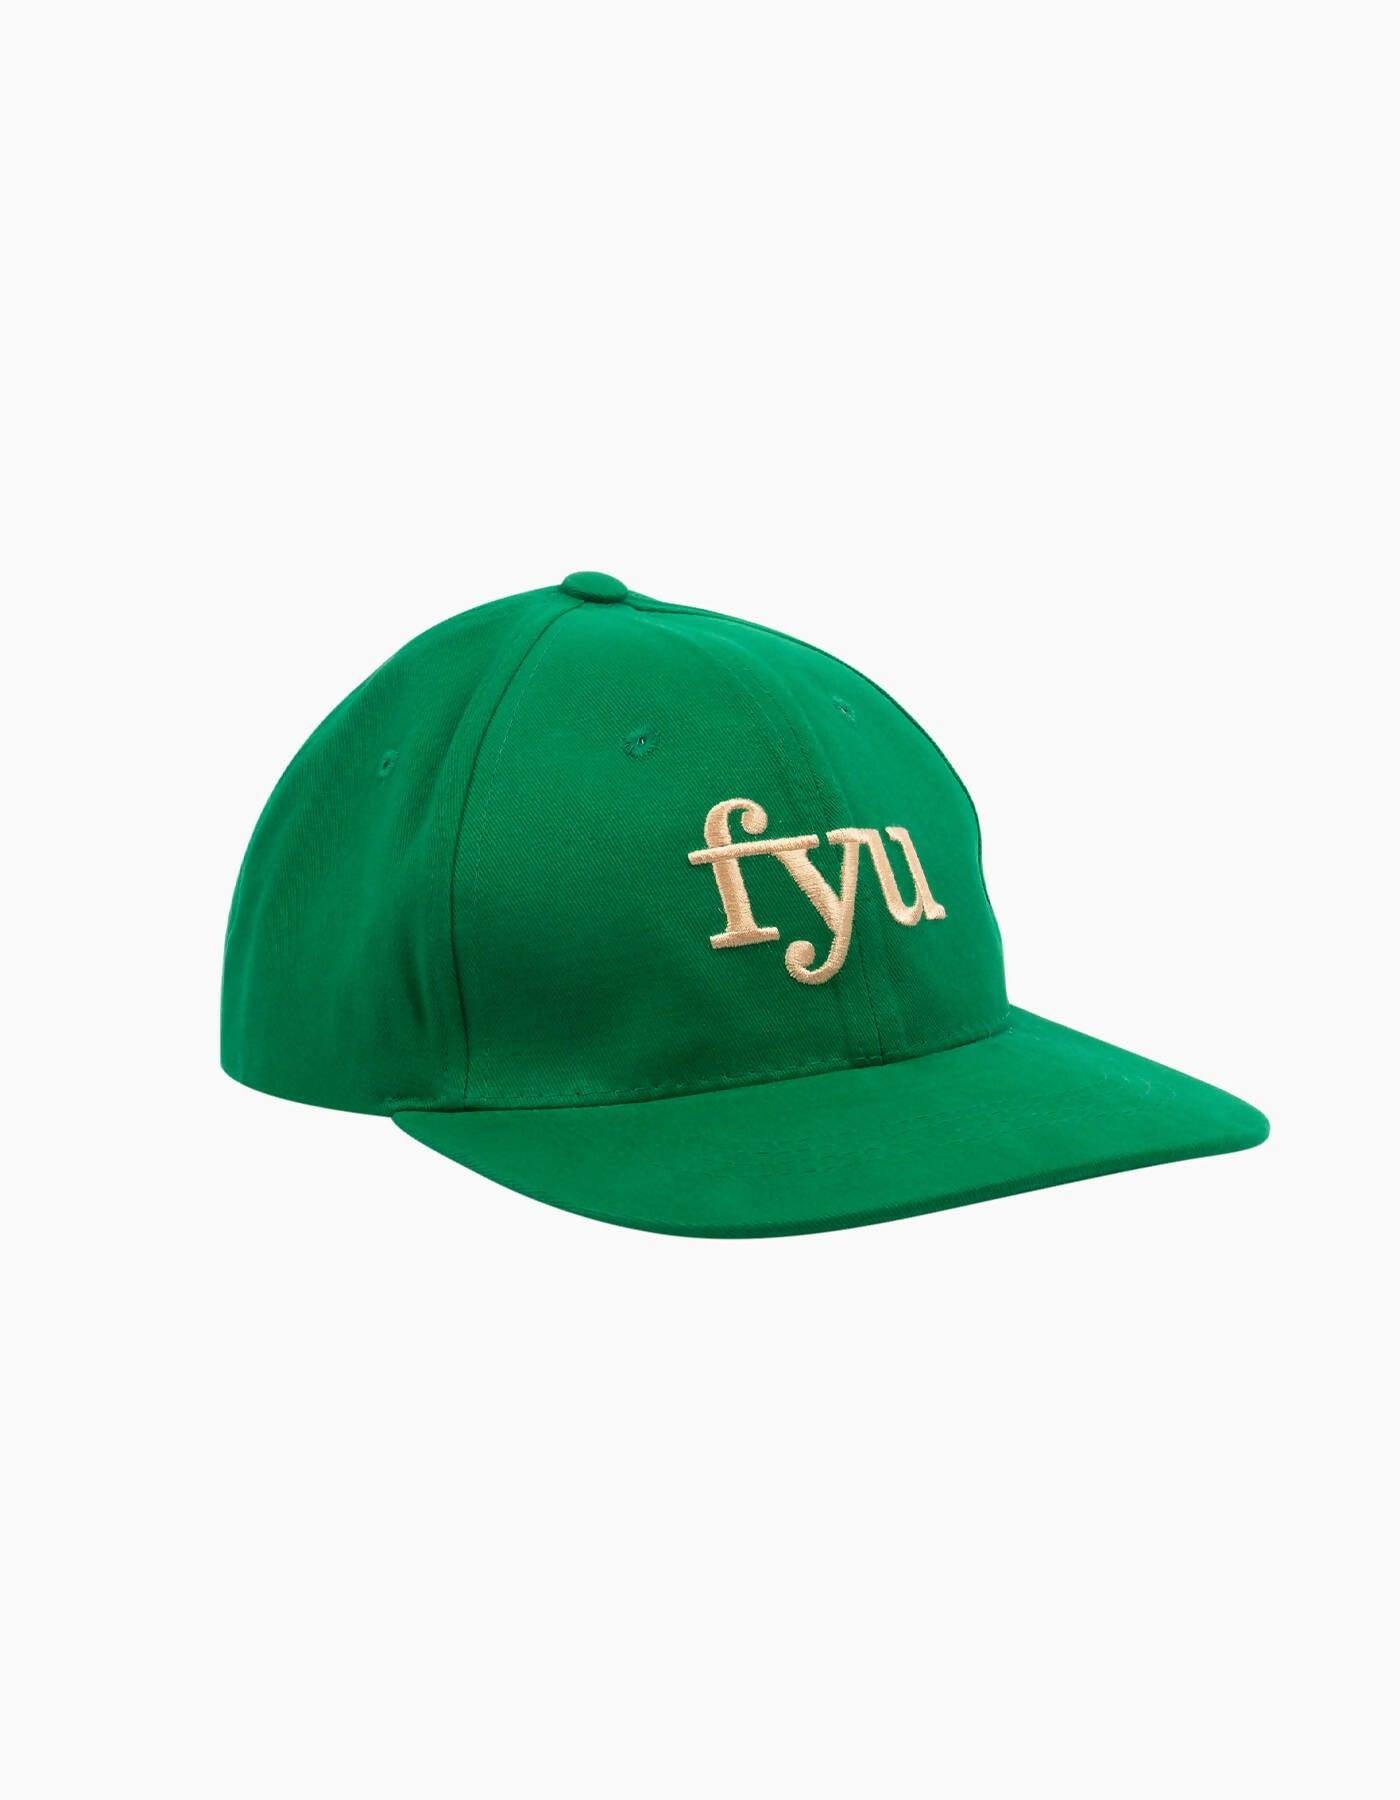 Green Embroidered Logo Baseball Cap by FYU PARIS